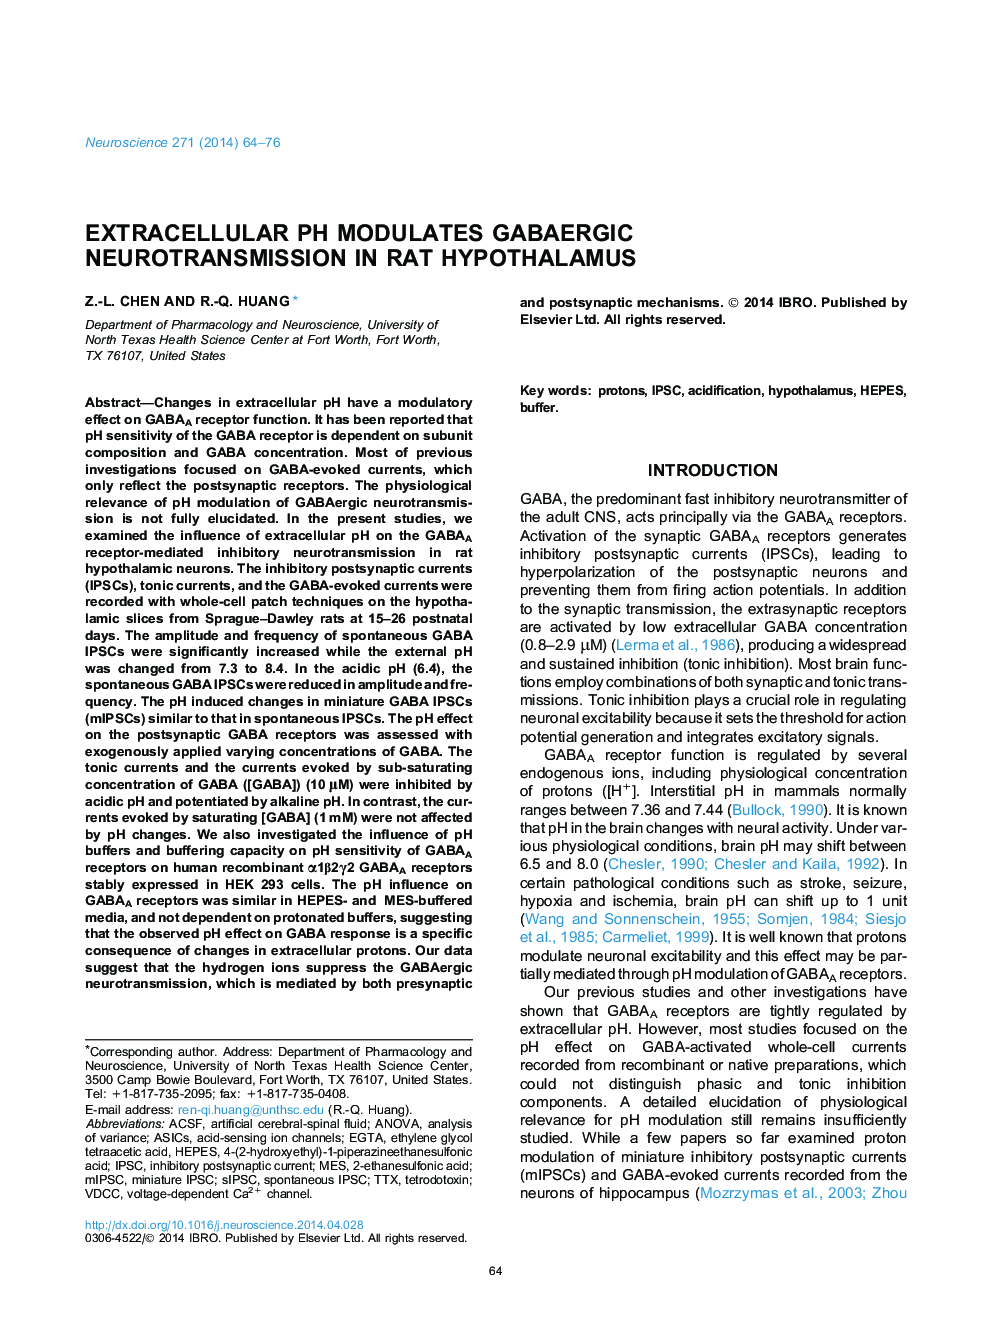 Extracellular pH modulates GABAergic neurotransmission in rat hypothalamus